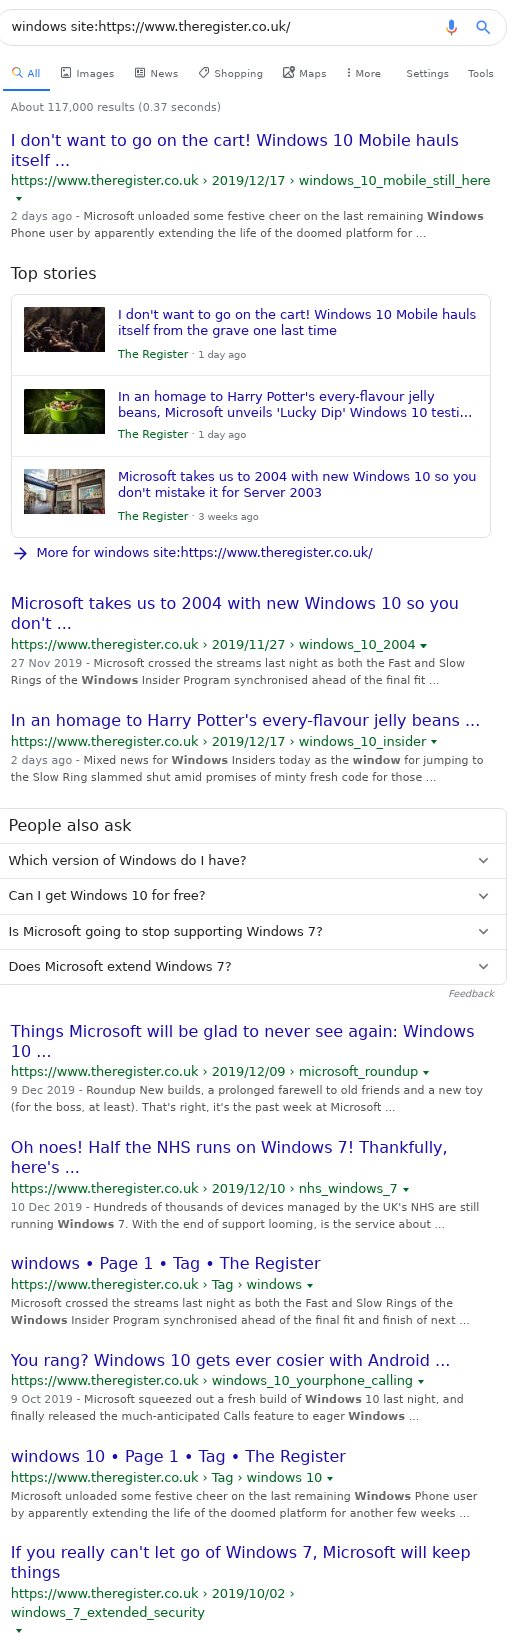 Microsoft Windows puff pieces